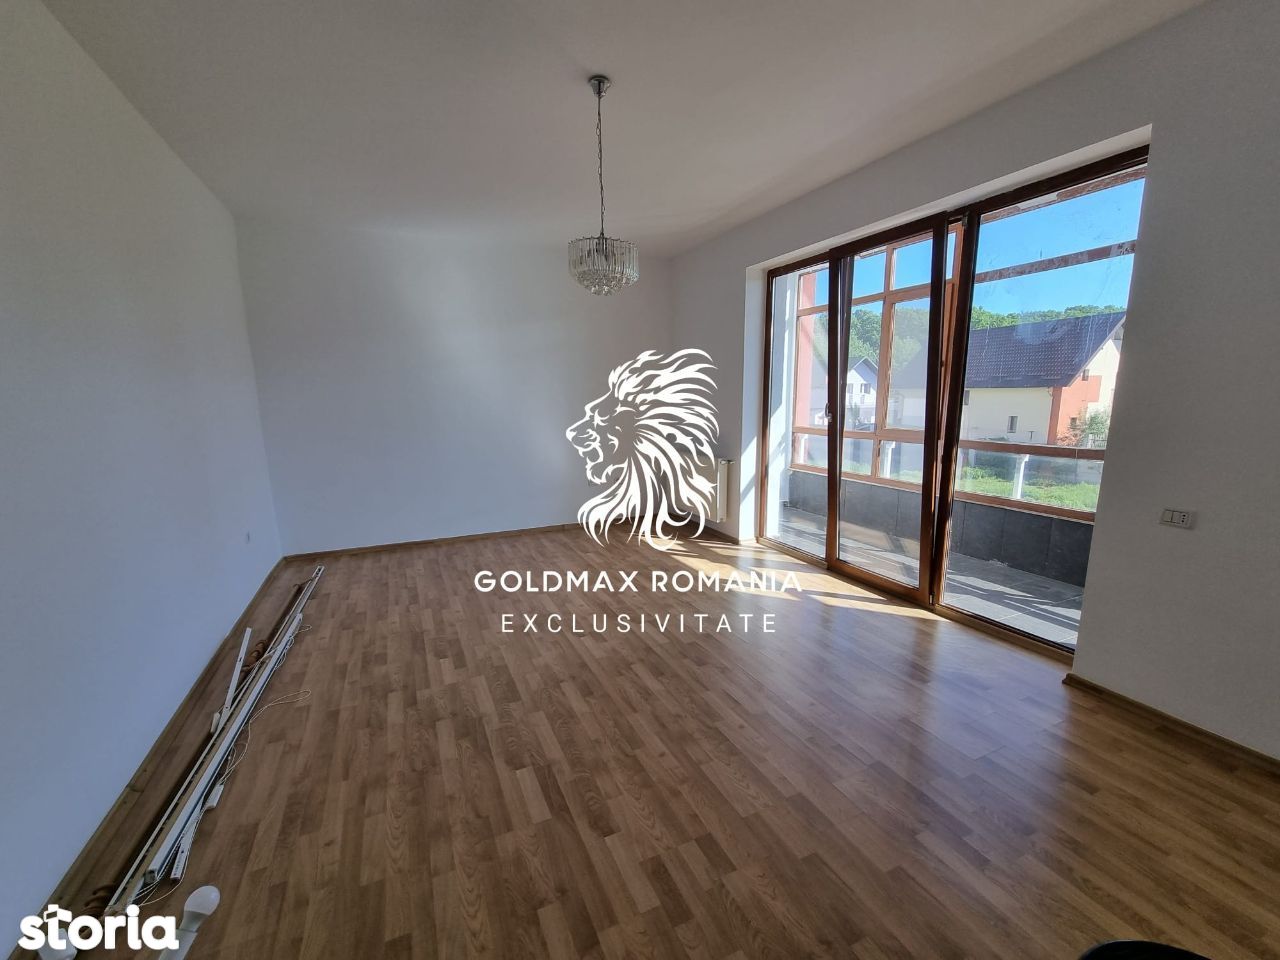 Apartament 2 camere | Gavana 58 m2 | Exclusivitate | goldmax.ro